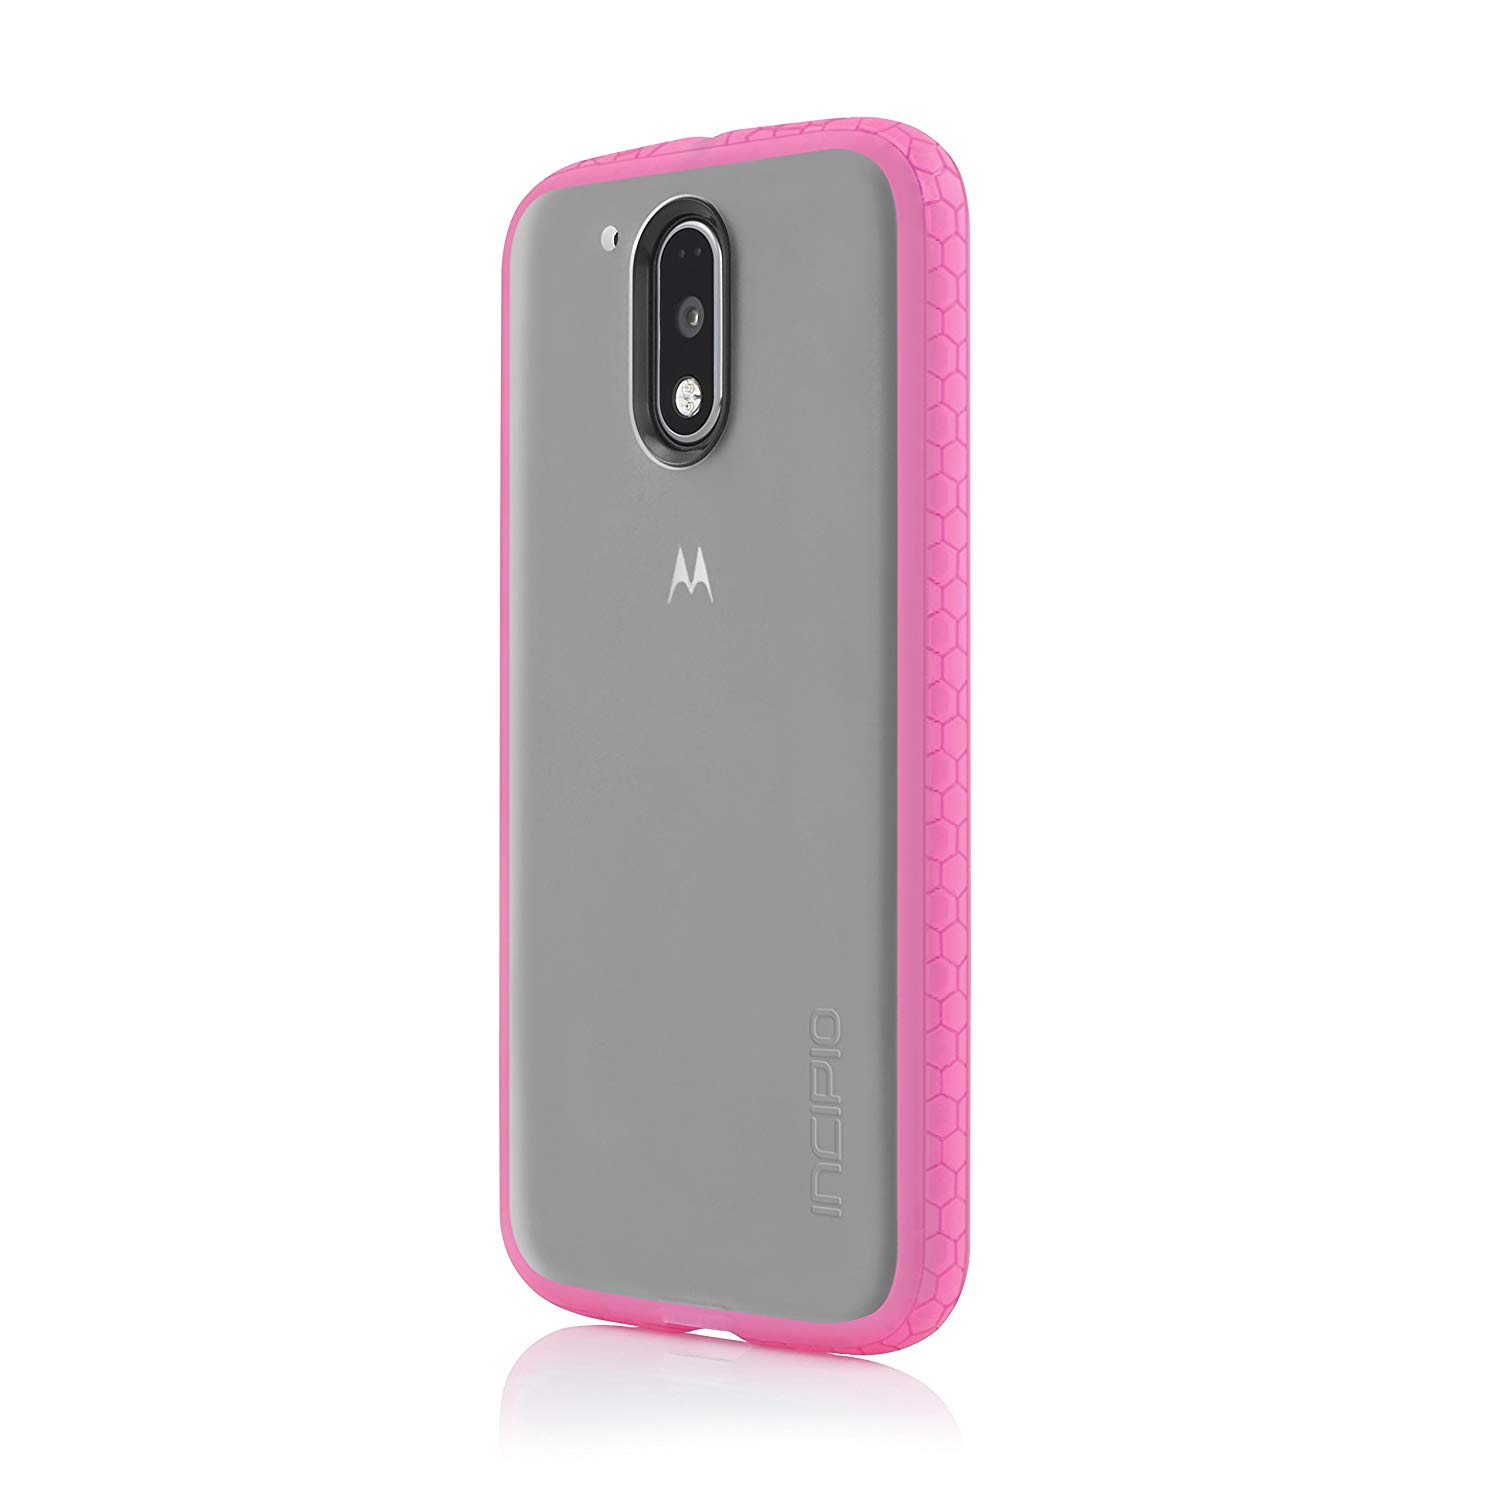 Incipio DualPro Case for Motorola Moto G4 & Moto G4 Plus - Retail Packaging - Frost Pink